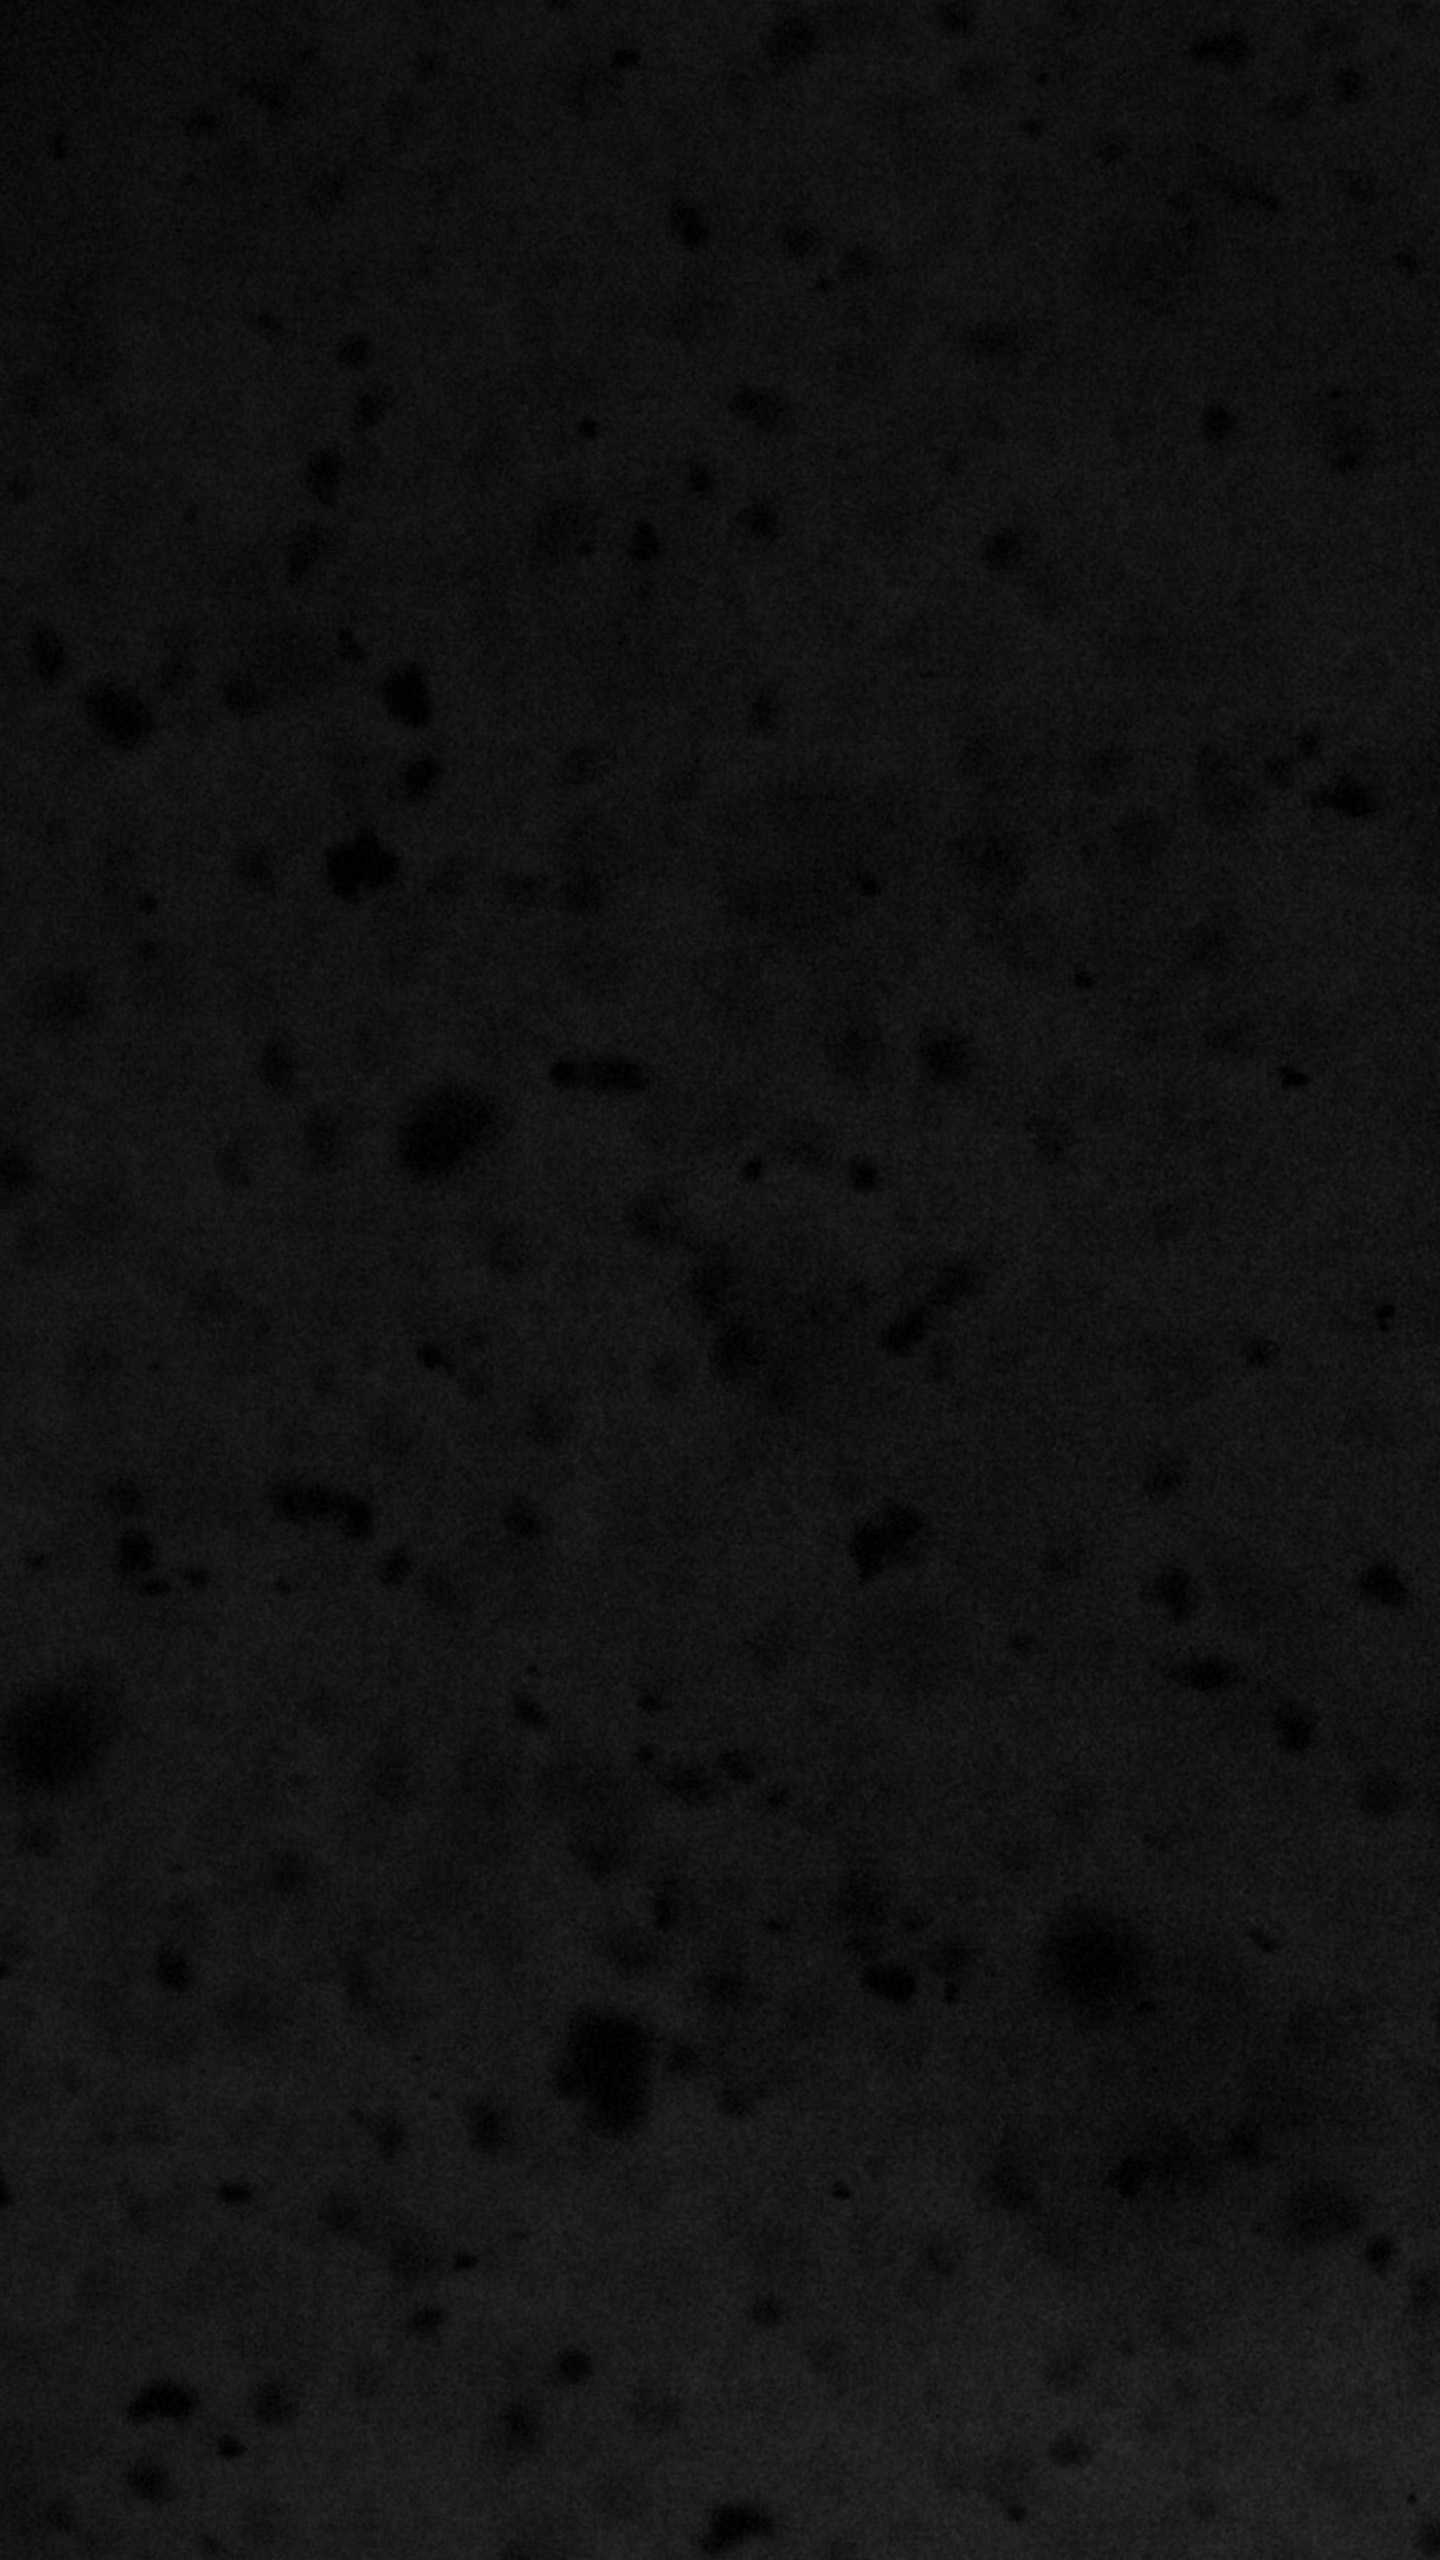 Black Texture Galaxy S6 Wallpaper